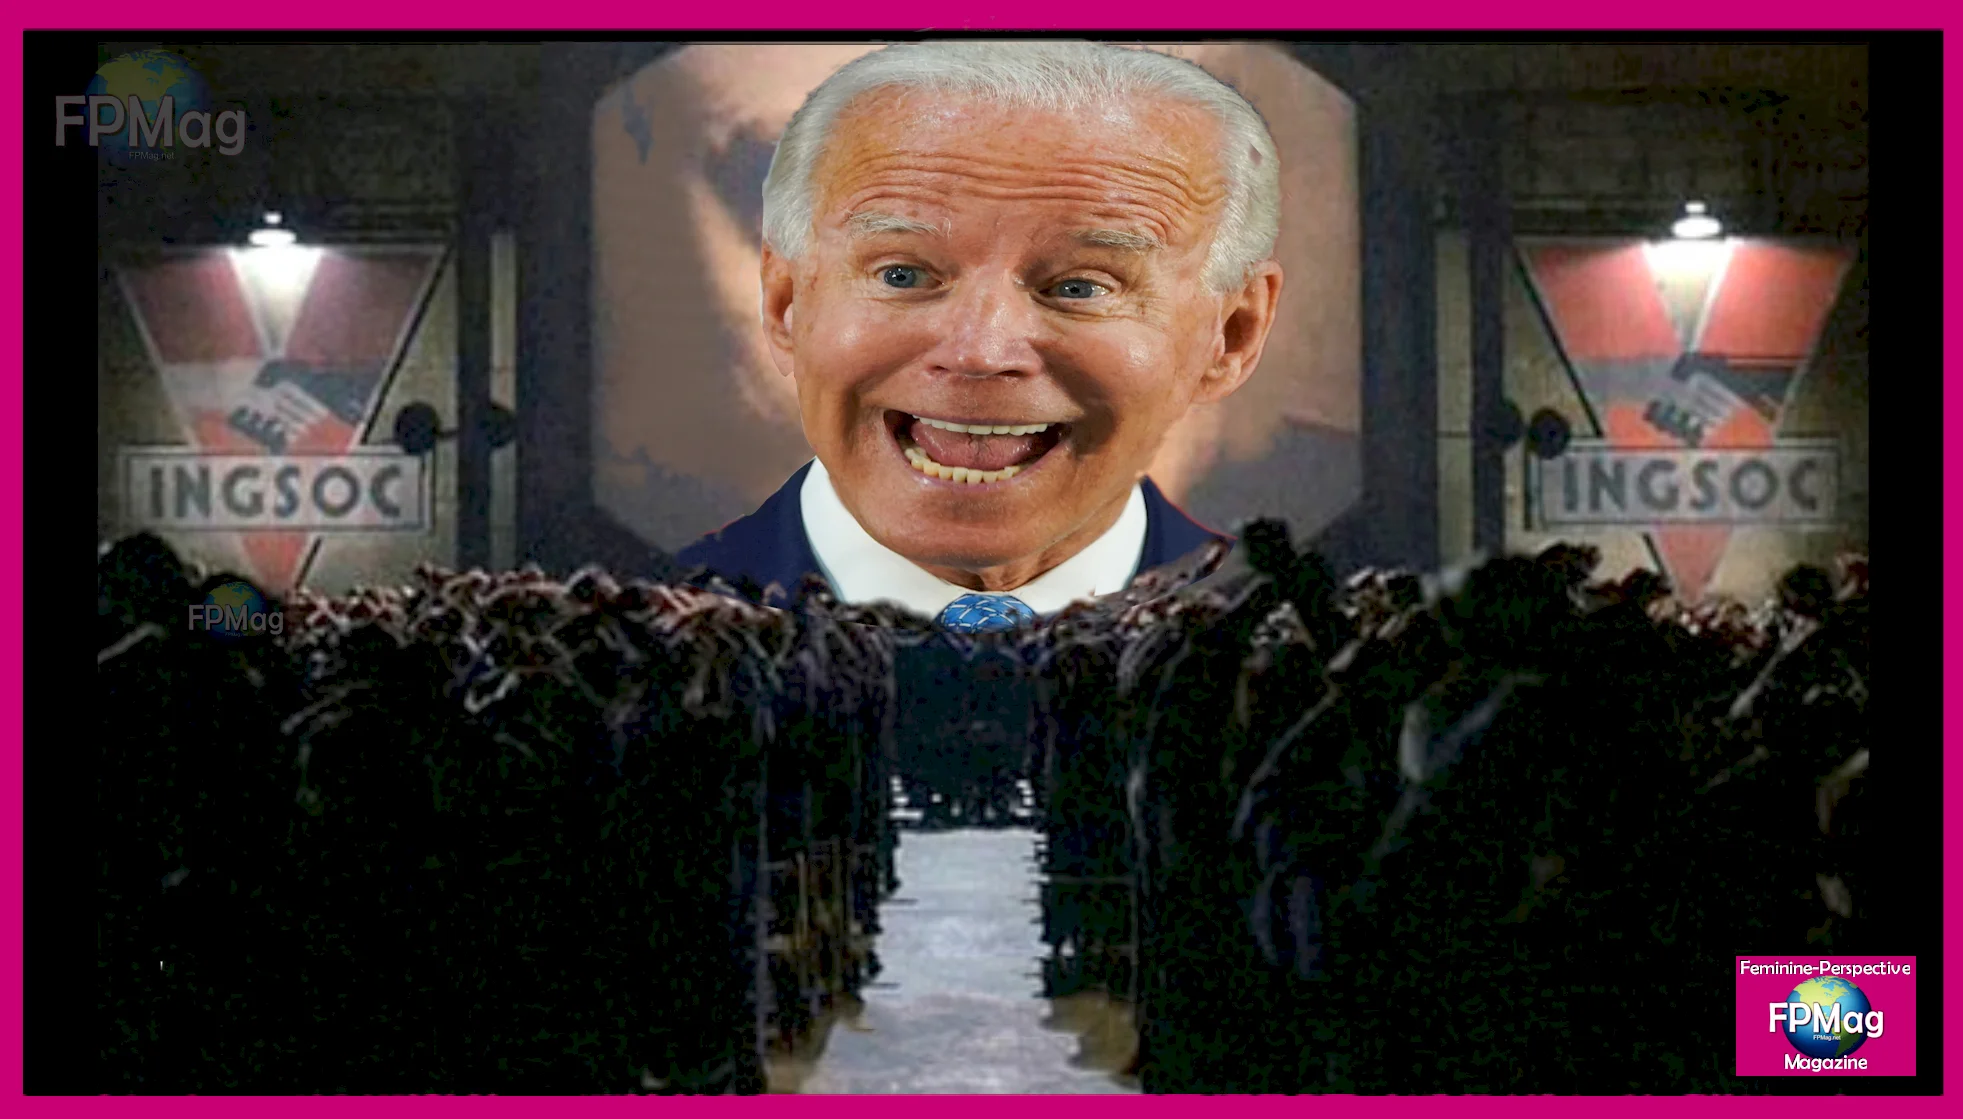 Socialistic propped up empty suit Tyrant Joe Biden INGSOC